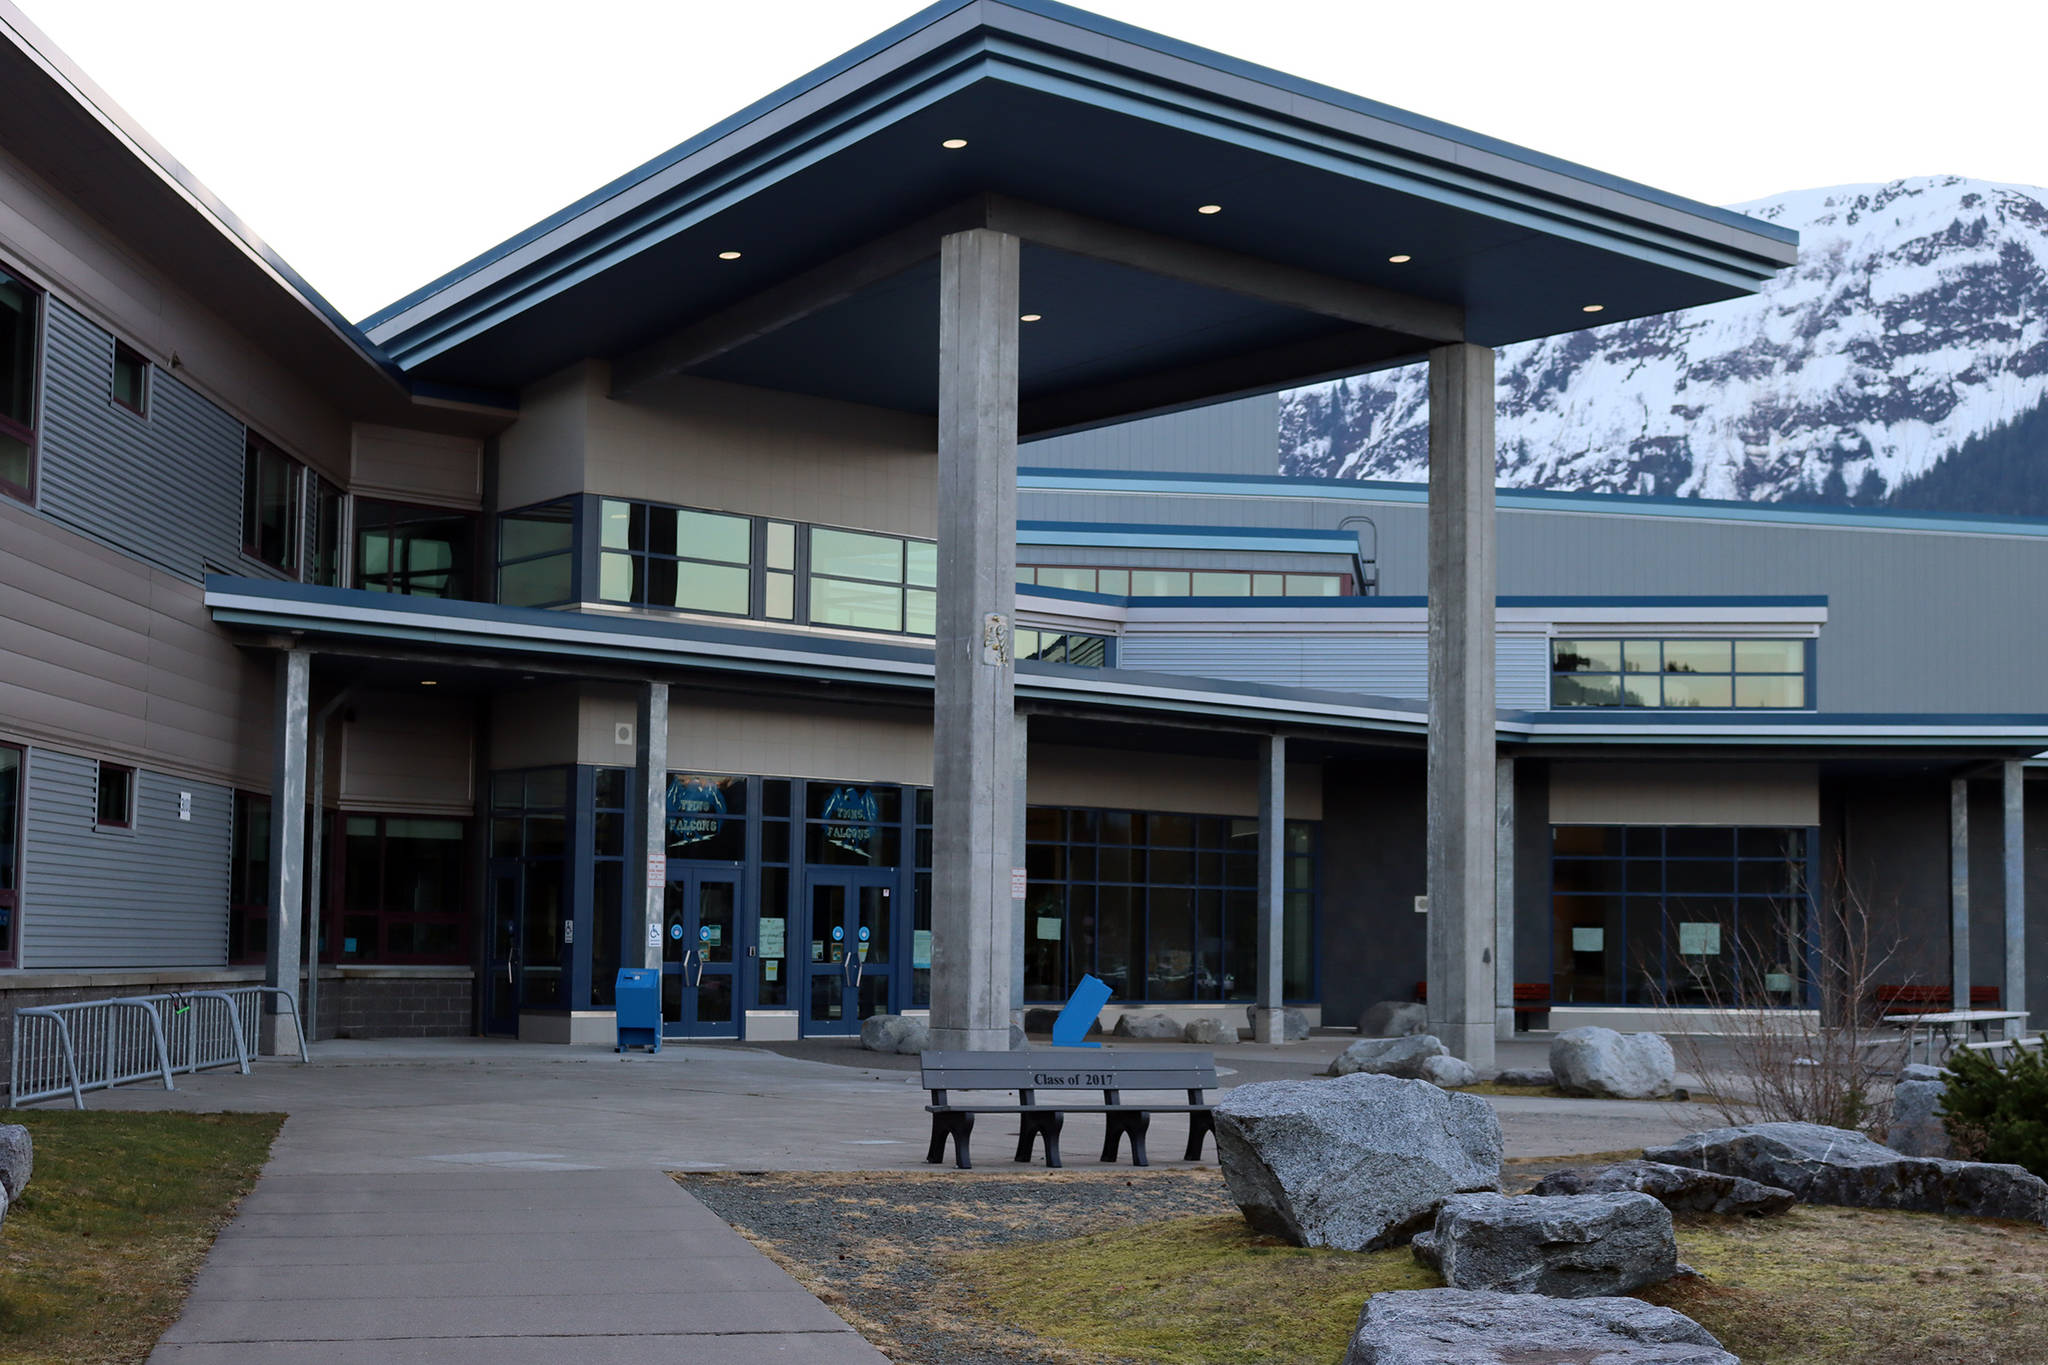 Thunder Mountain High School on April 18, 2021. When school resumes in August, Juneau teacher Kelly Stewart will be the interim assistant principal, district officials announced on Friday. (Ben Hohenstatt / Juneau Empire)